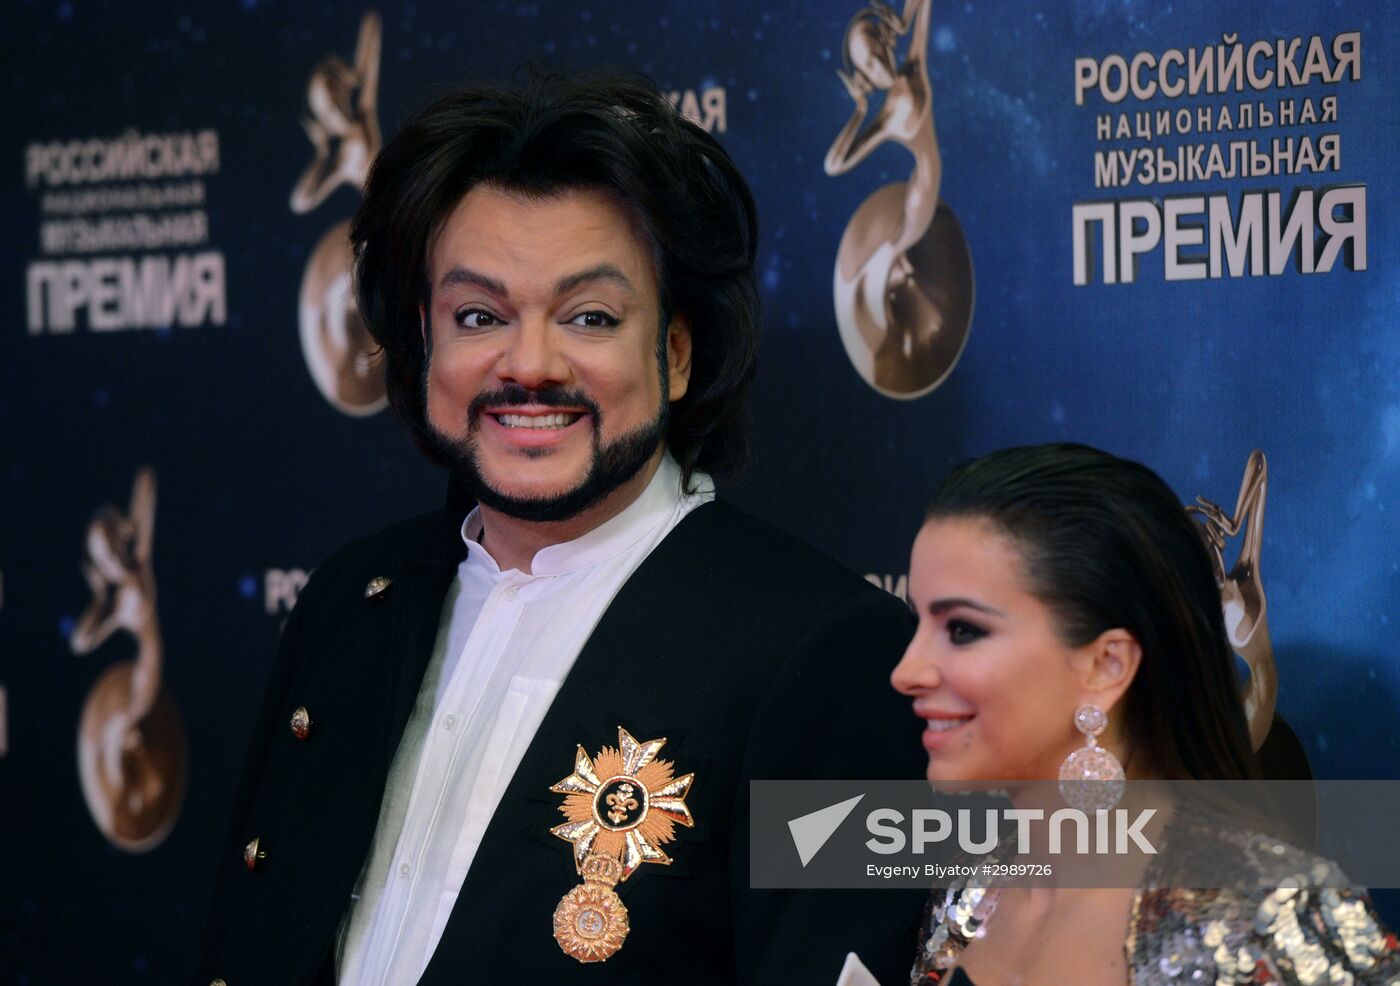 Russian National Music Award